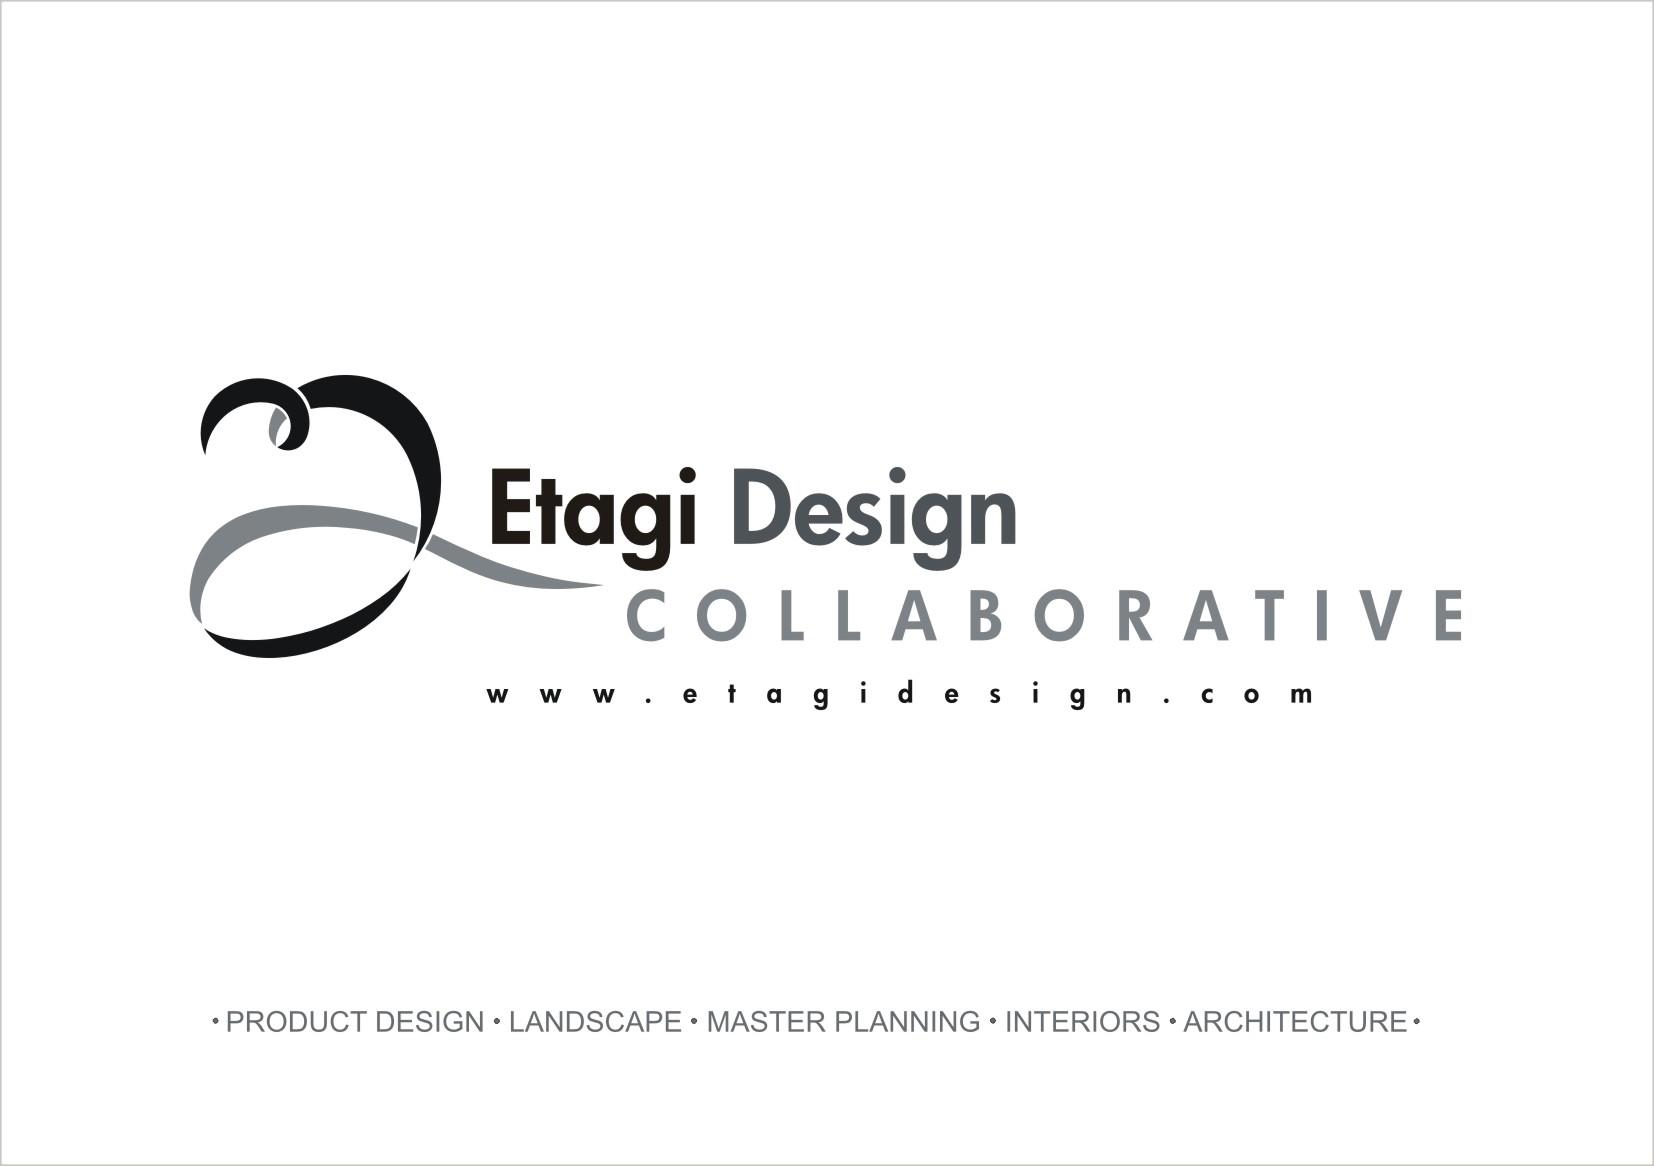 Etagi Design Collaborative|IT Services|Professional Services